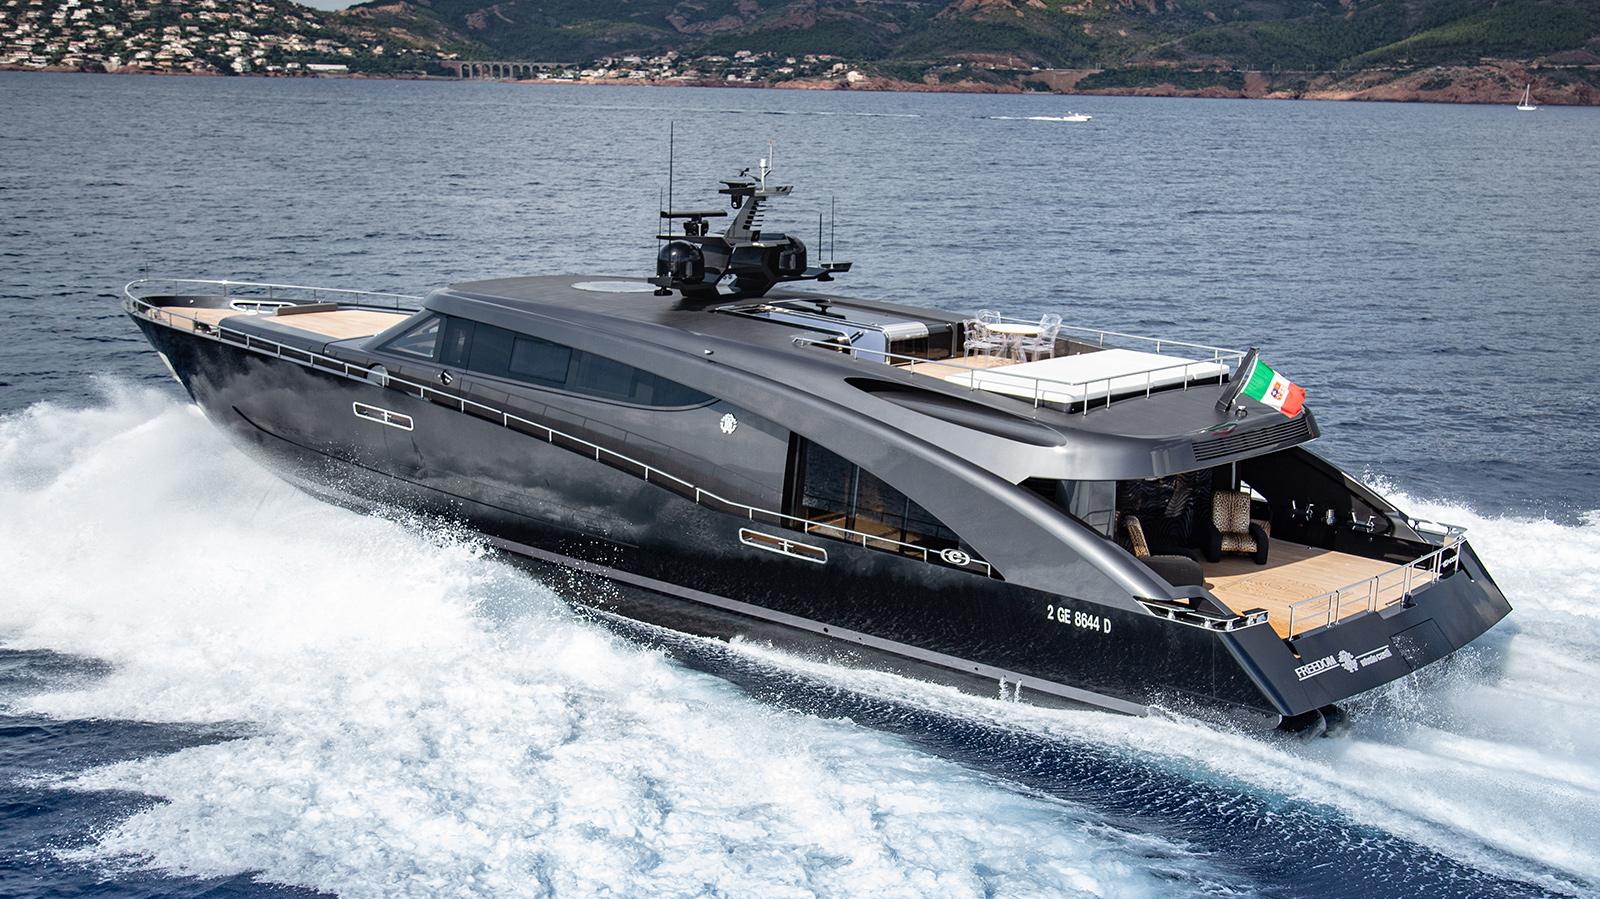 In photos Roberto Cavallis new superyacht Freedom revealed